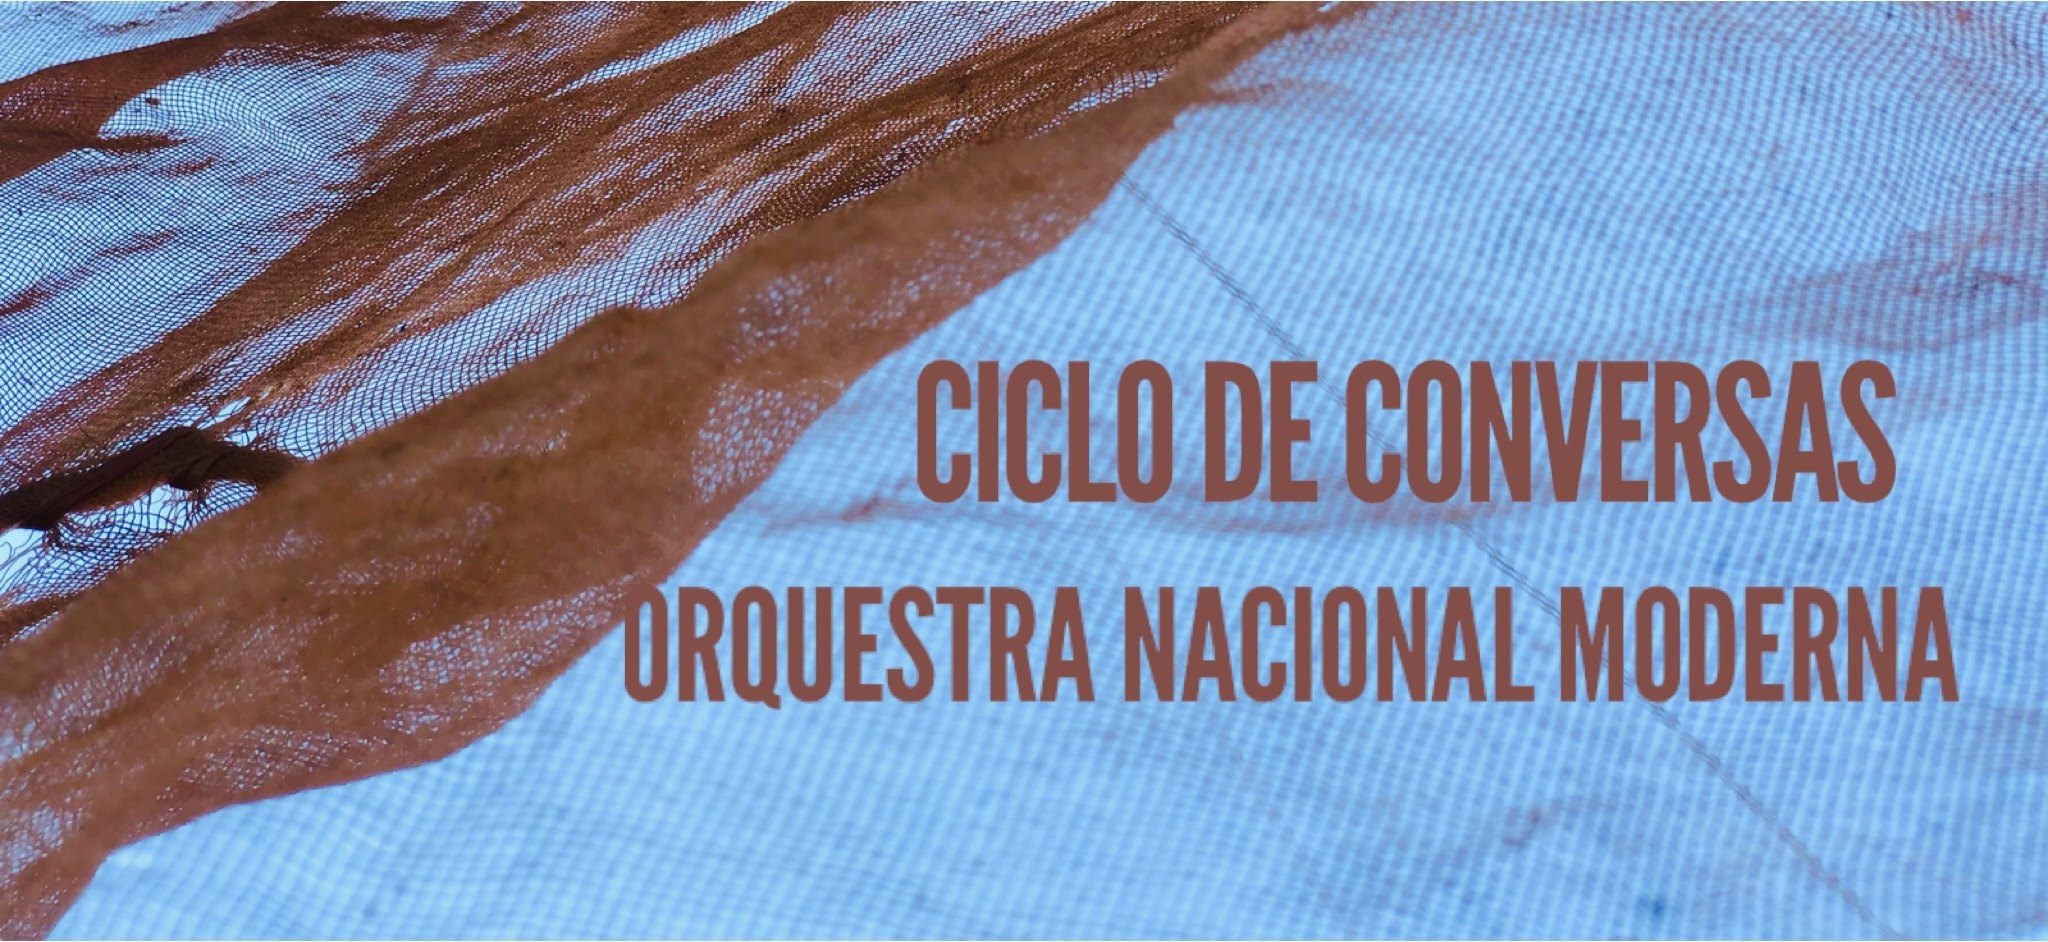 Ciclo de conversas sobre música orquestral pela ONM # 02